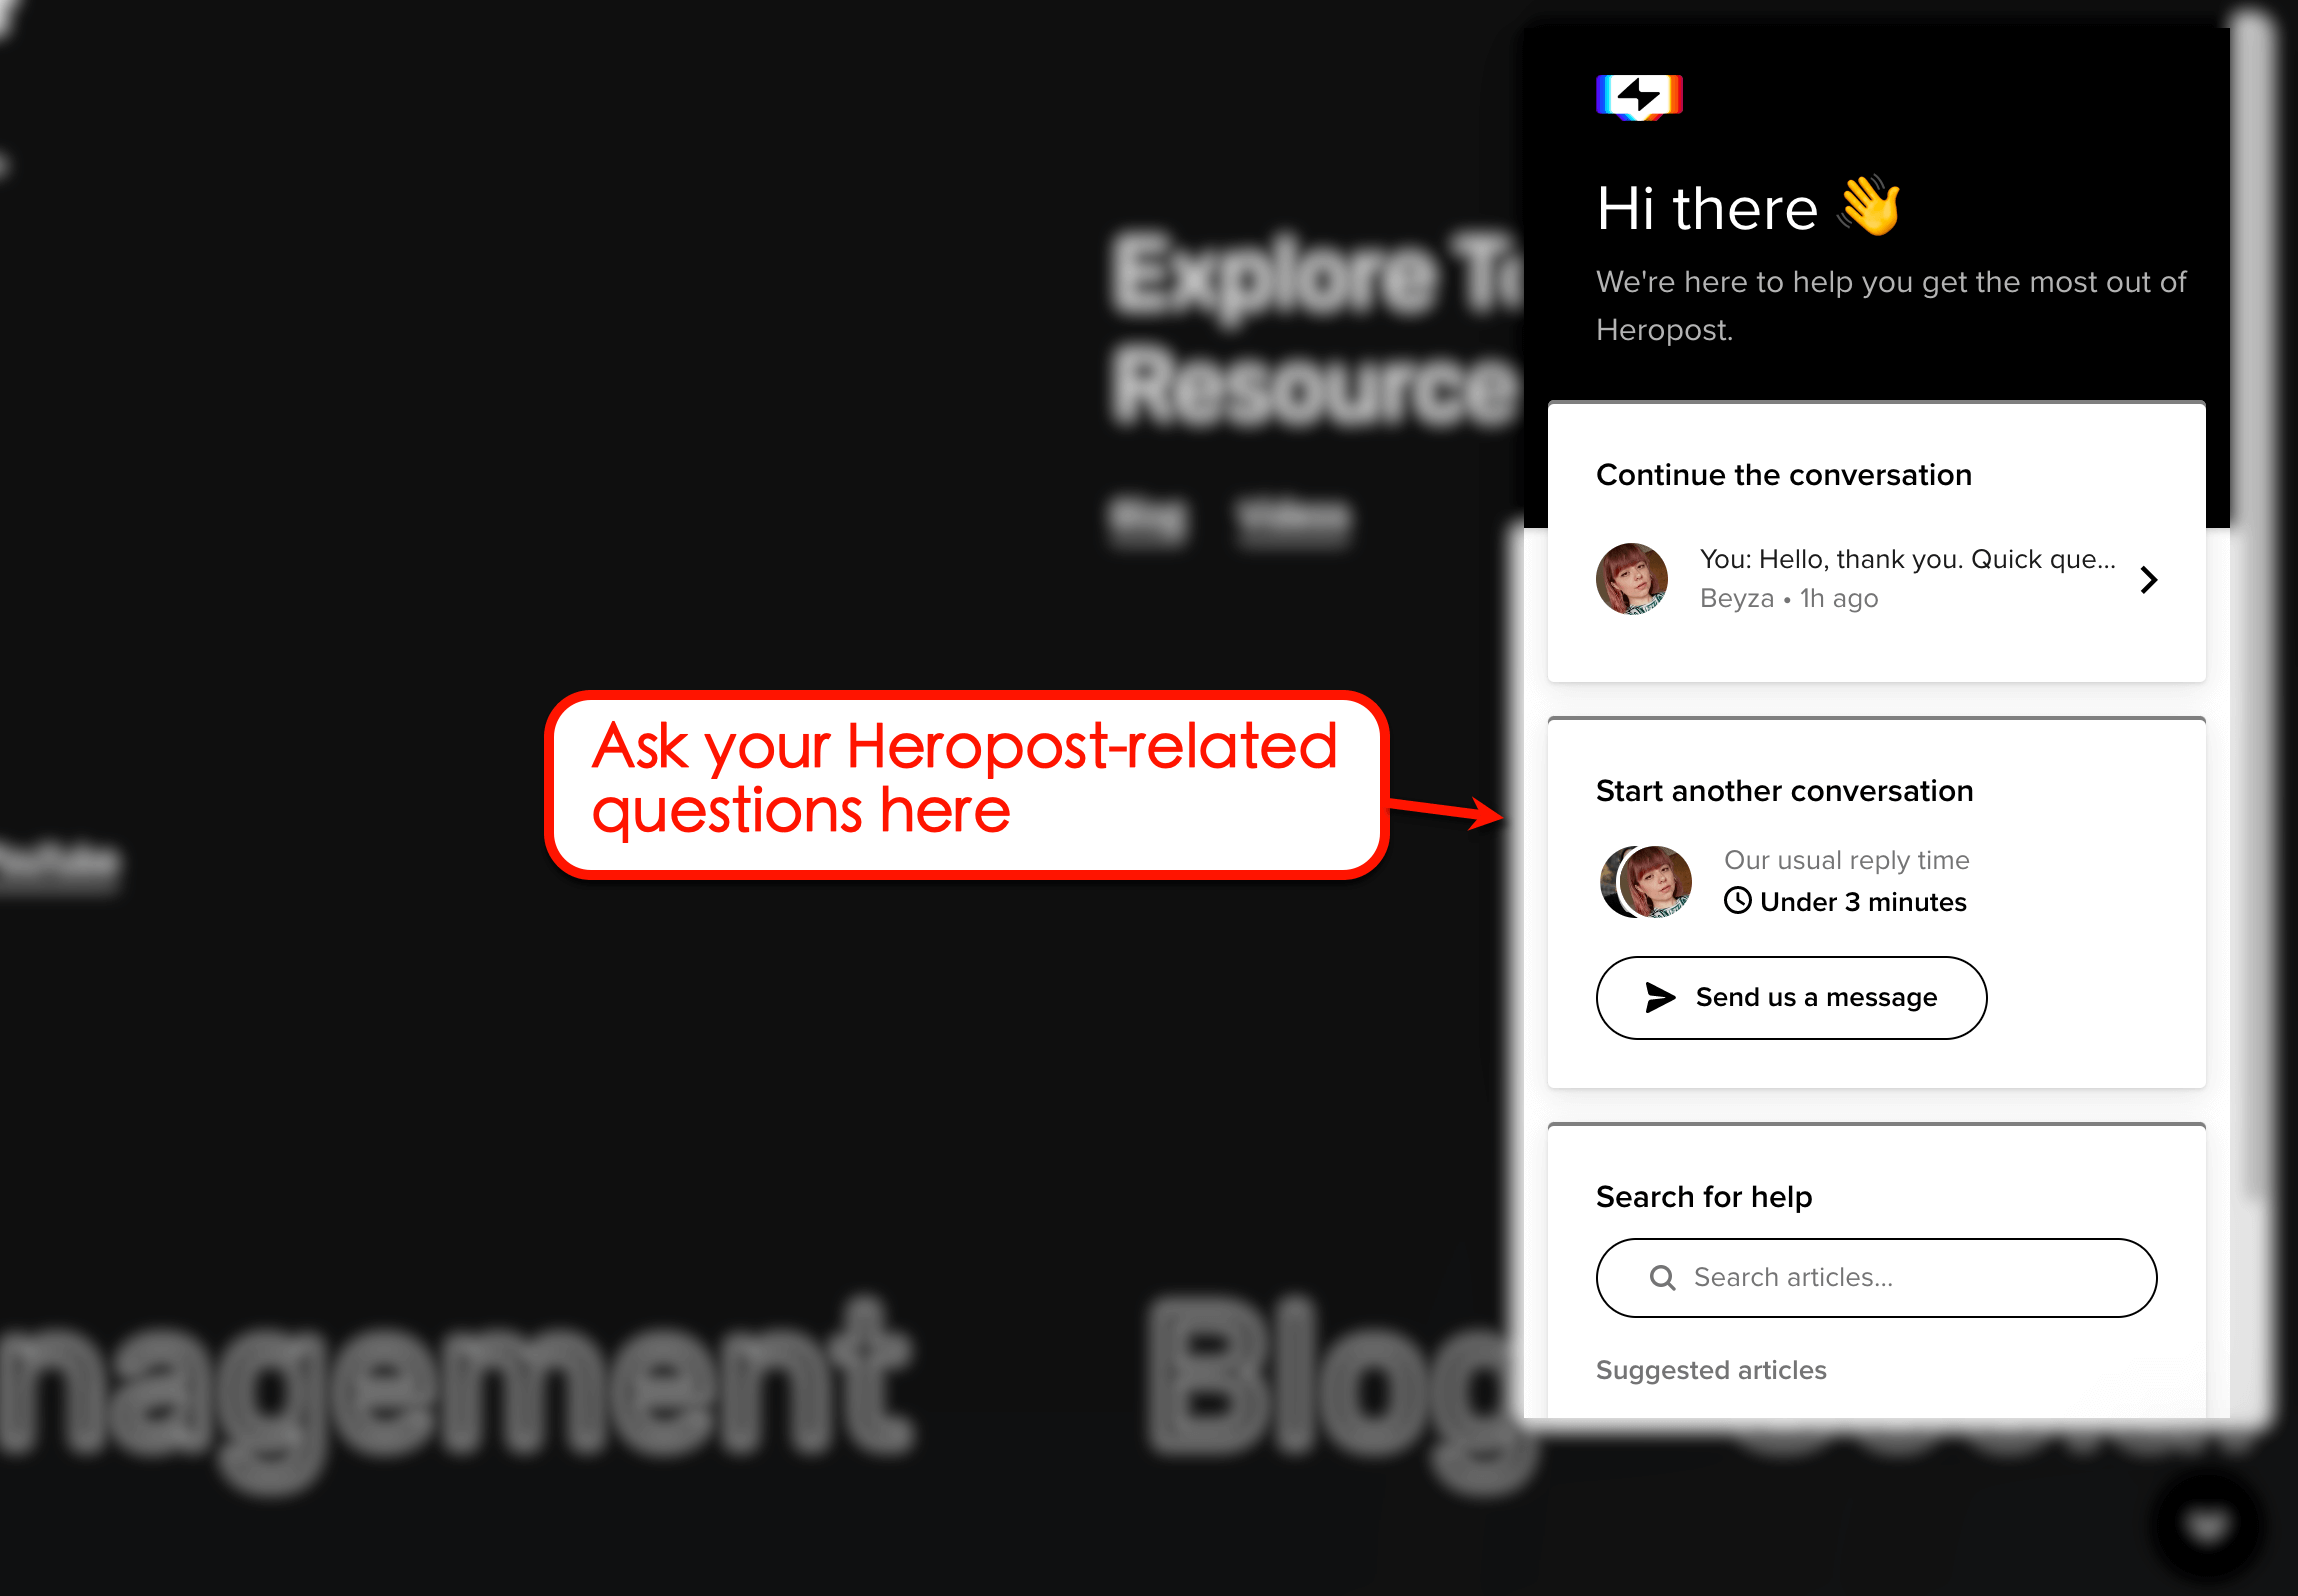 Heropost's customer support